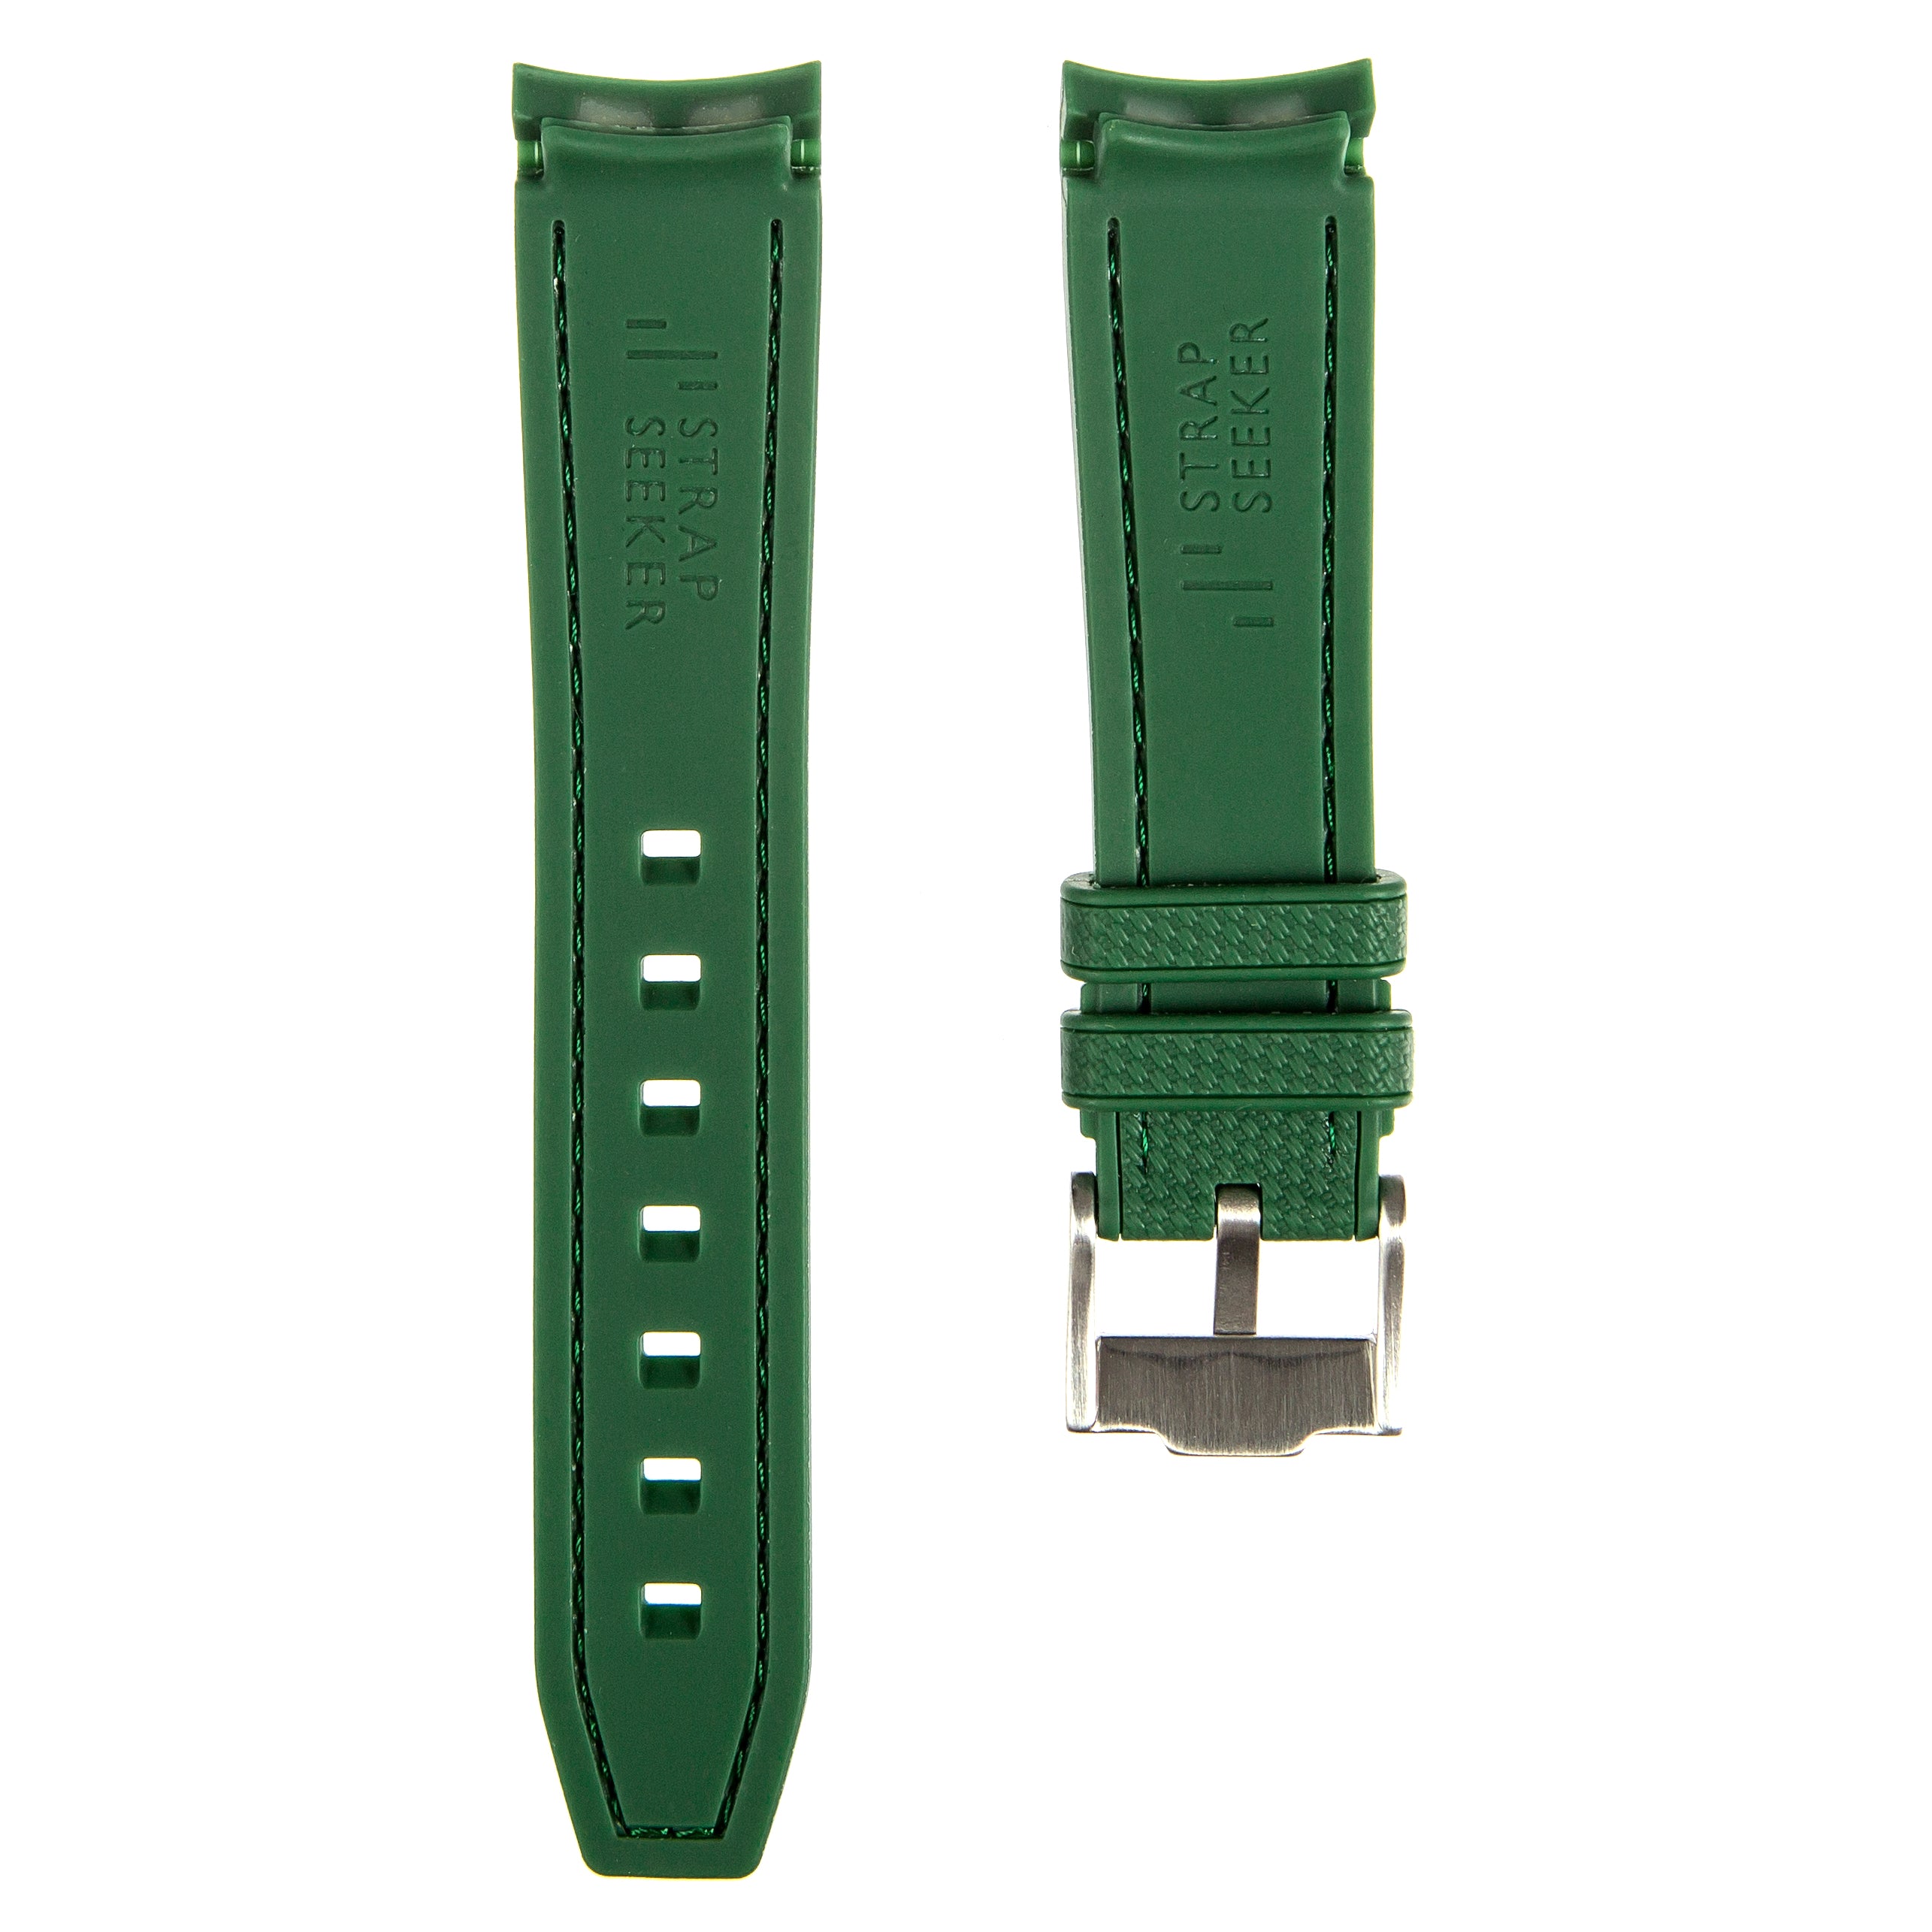 Textured Curved End Premium Silicone Strap - Compatible with Rolex Submariner - Dark Green With White Stitch (2405)